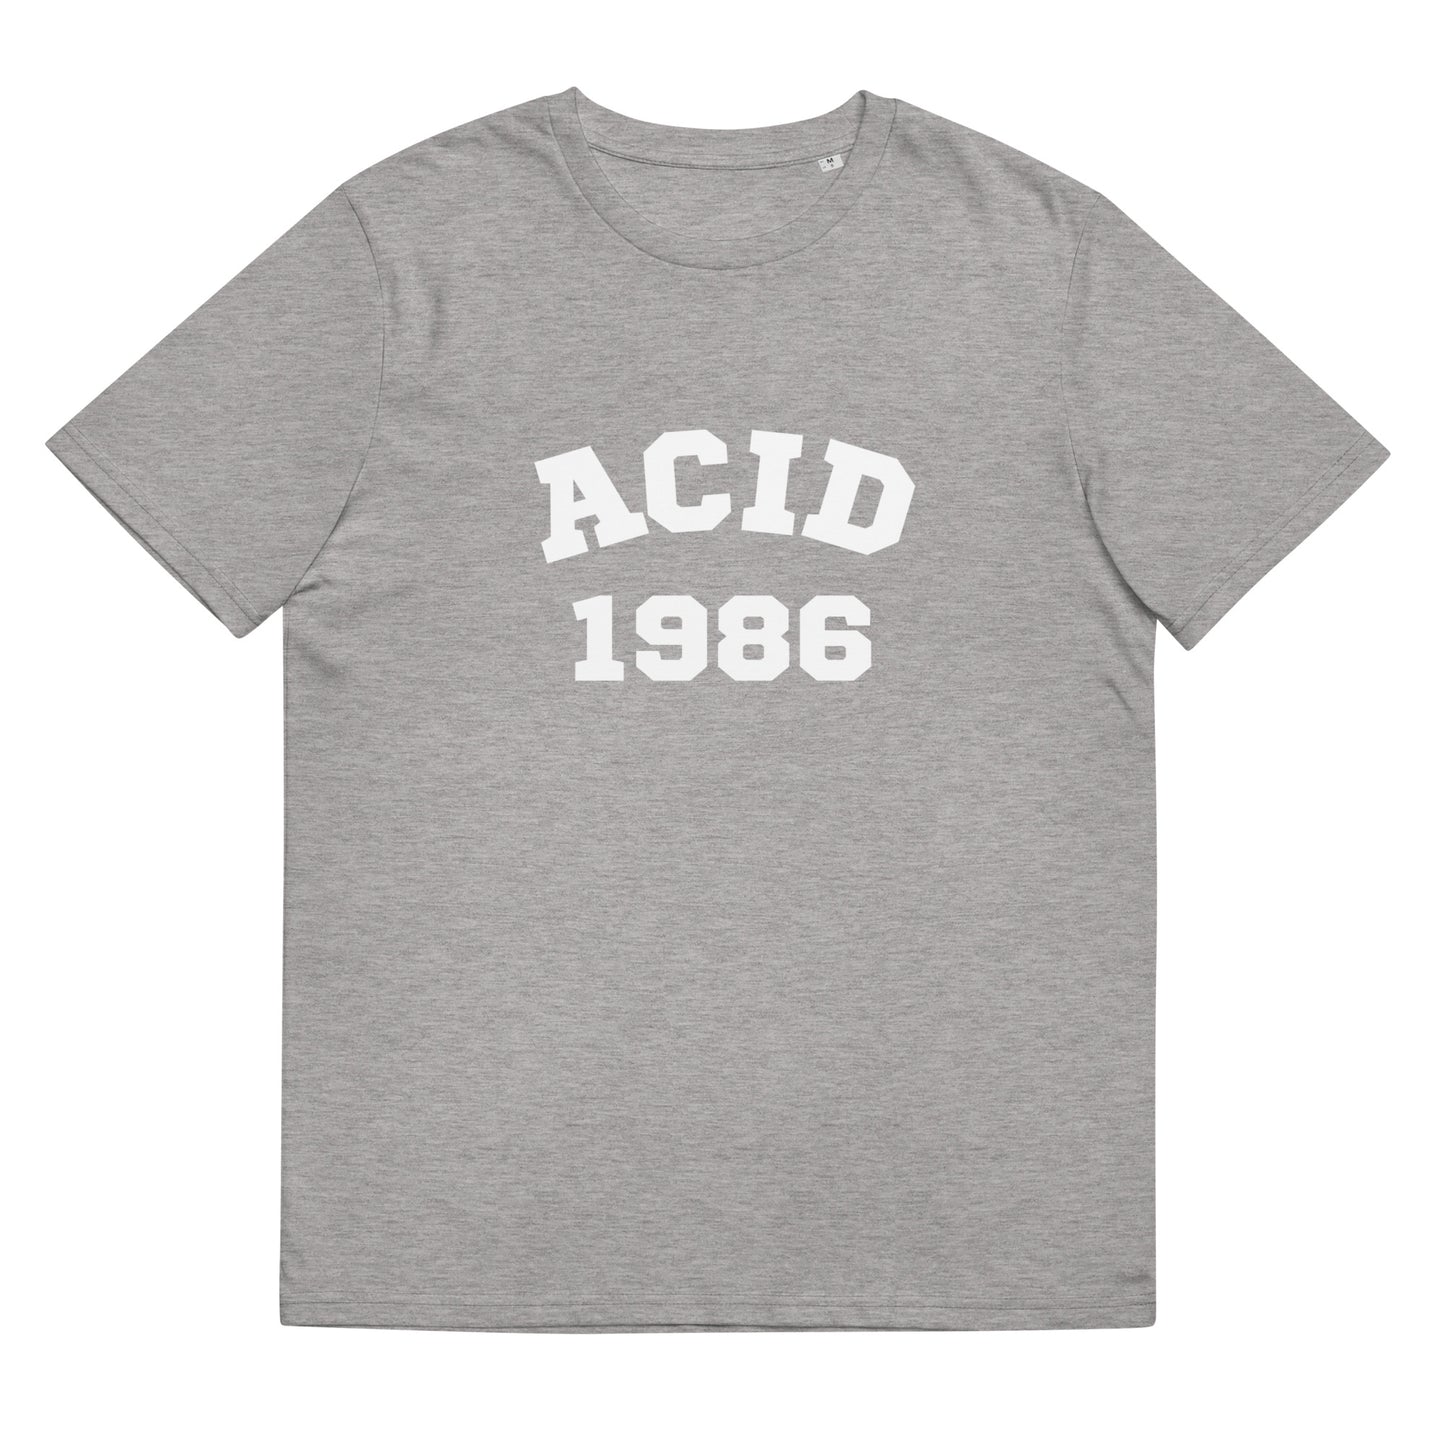 Acid 1986 - Unisex organic cotton t-shirt